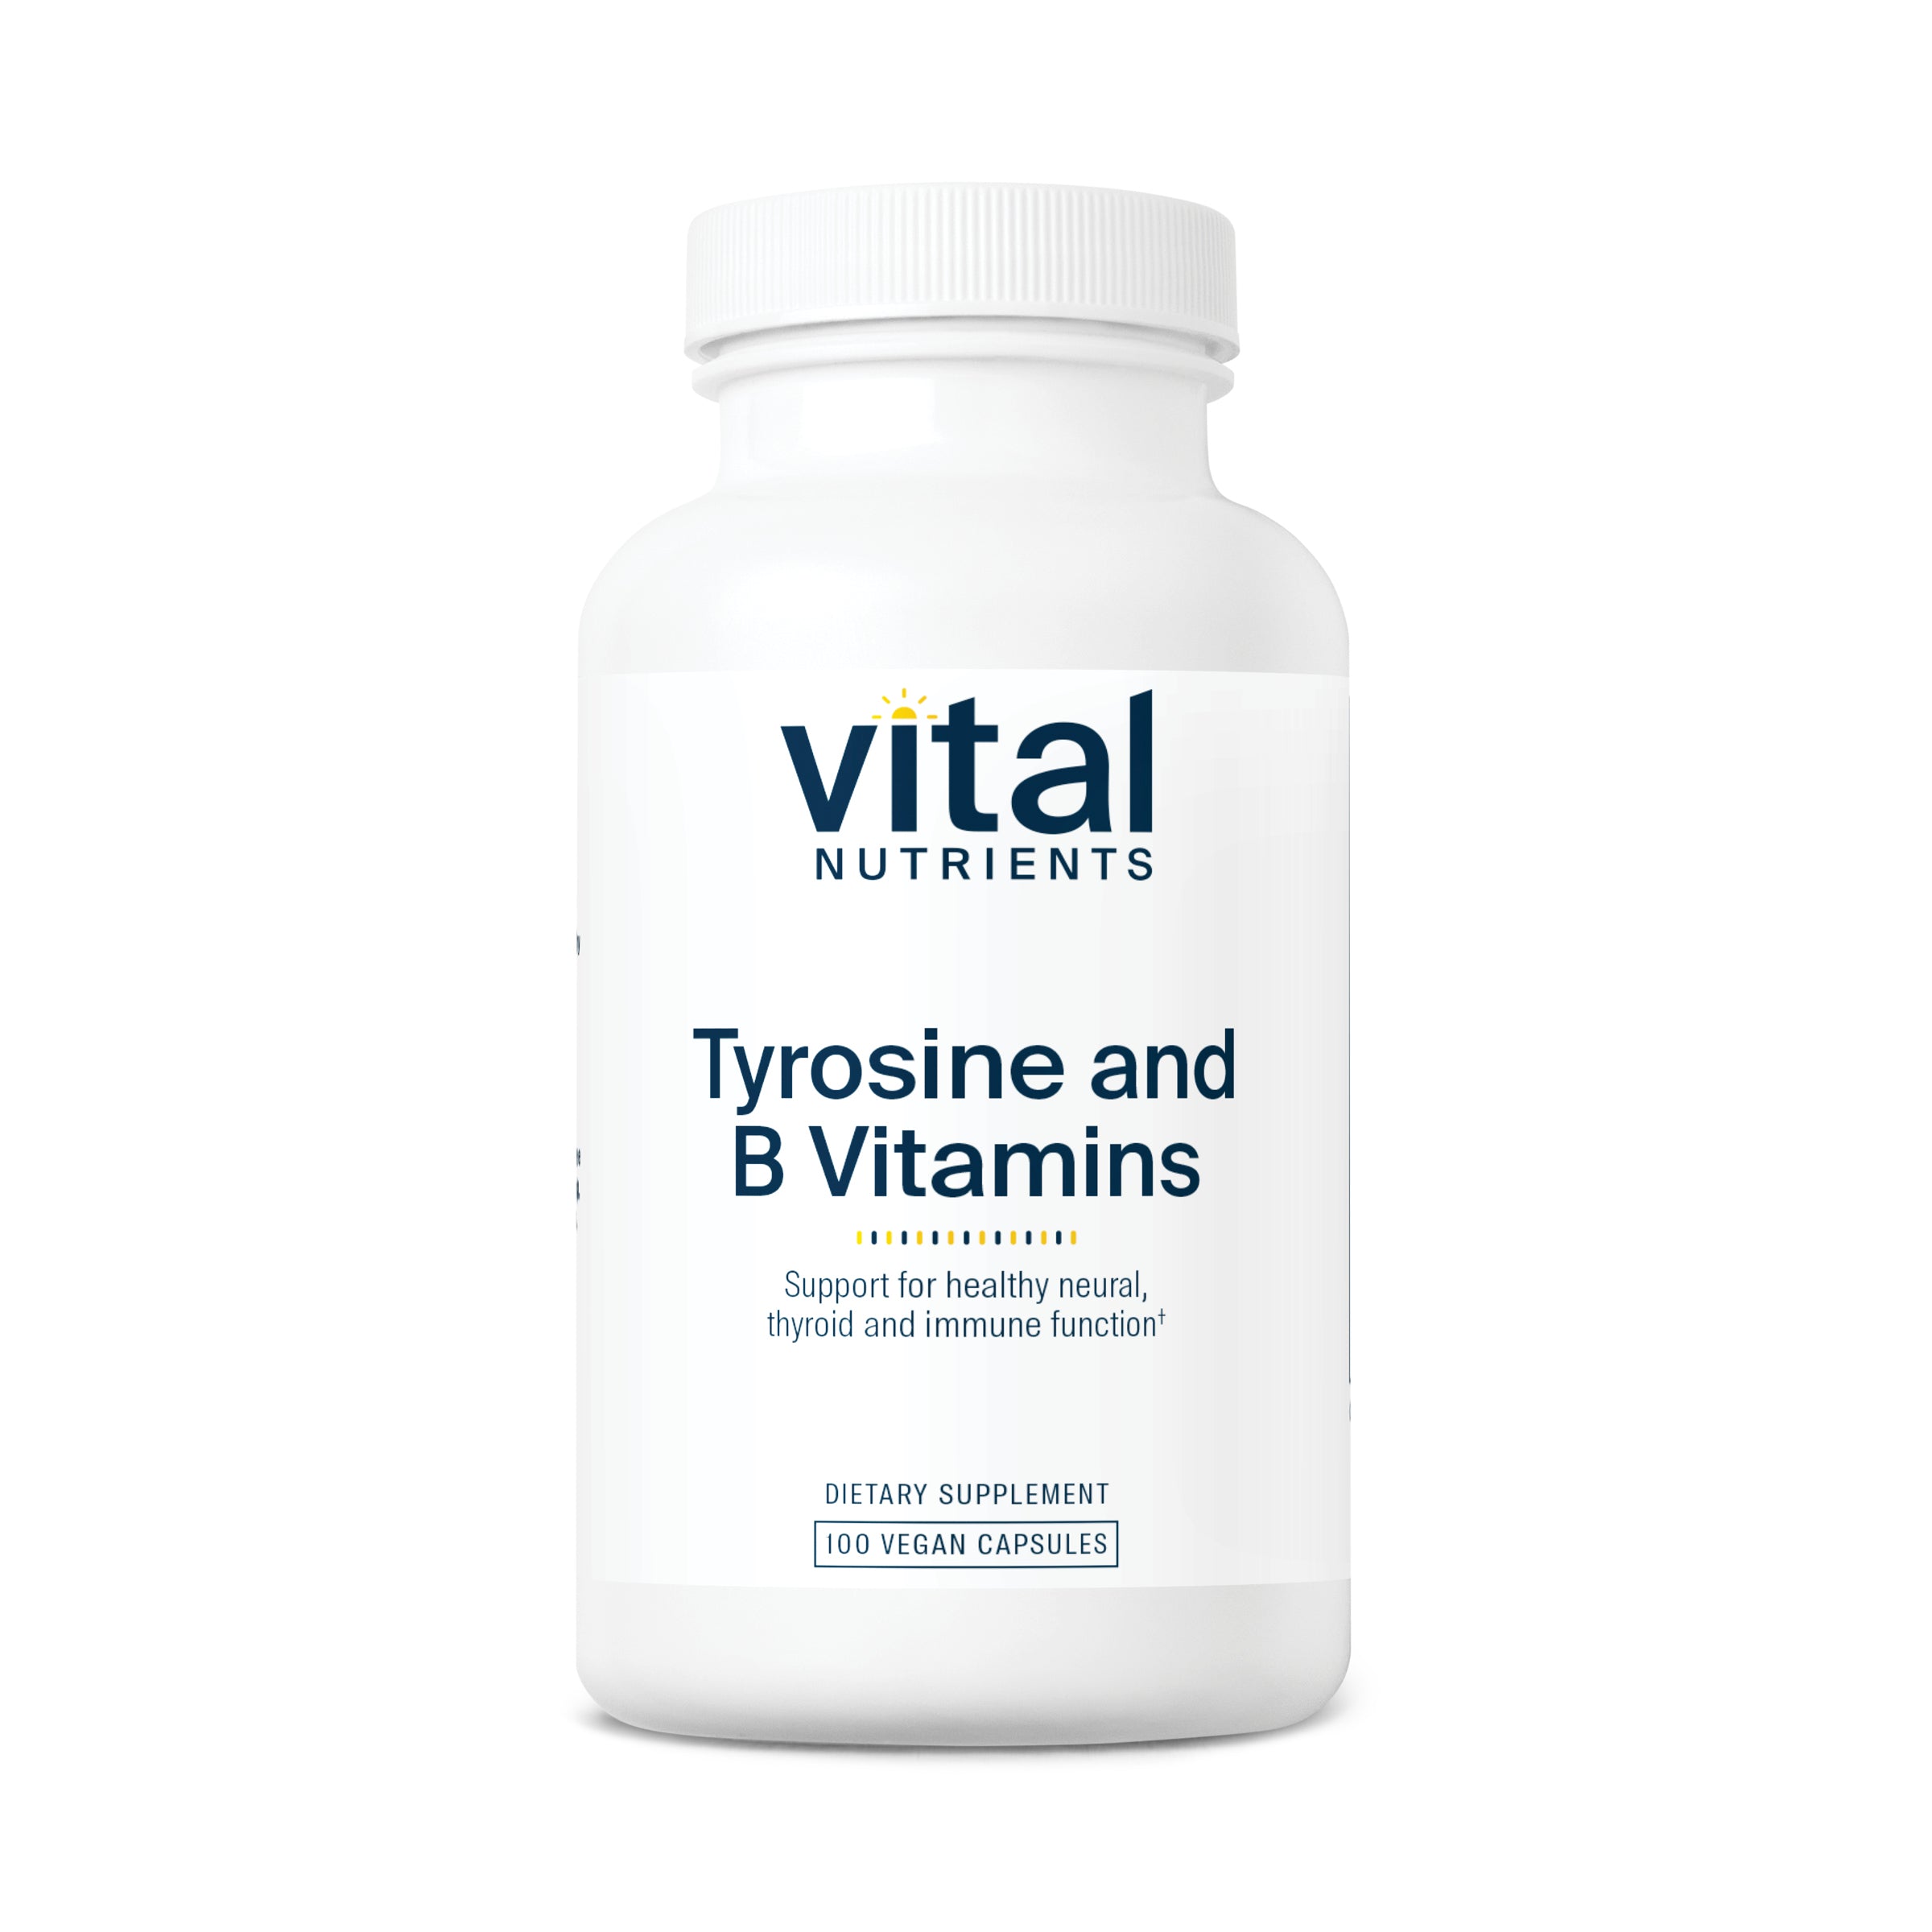 Tyrosine and B Vitamins